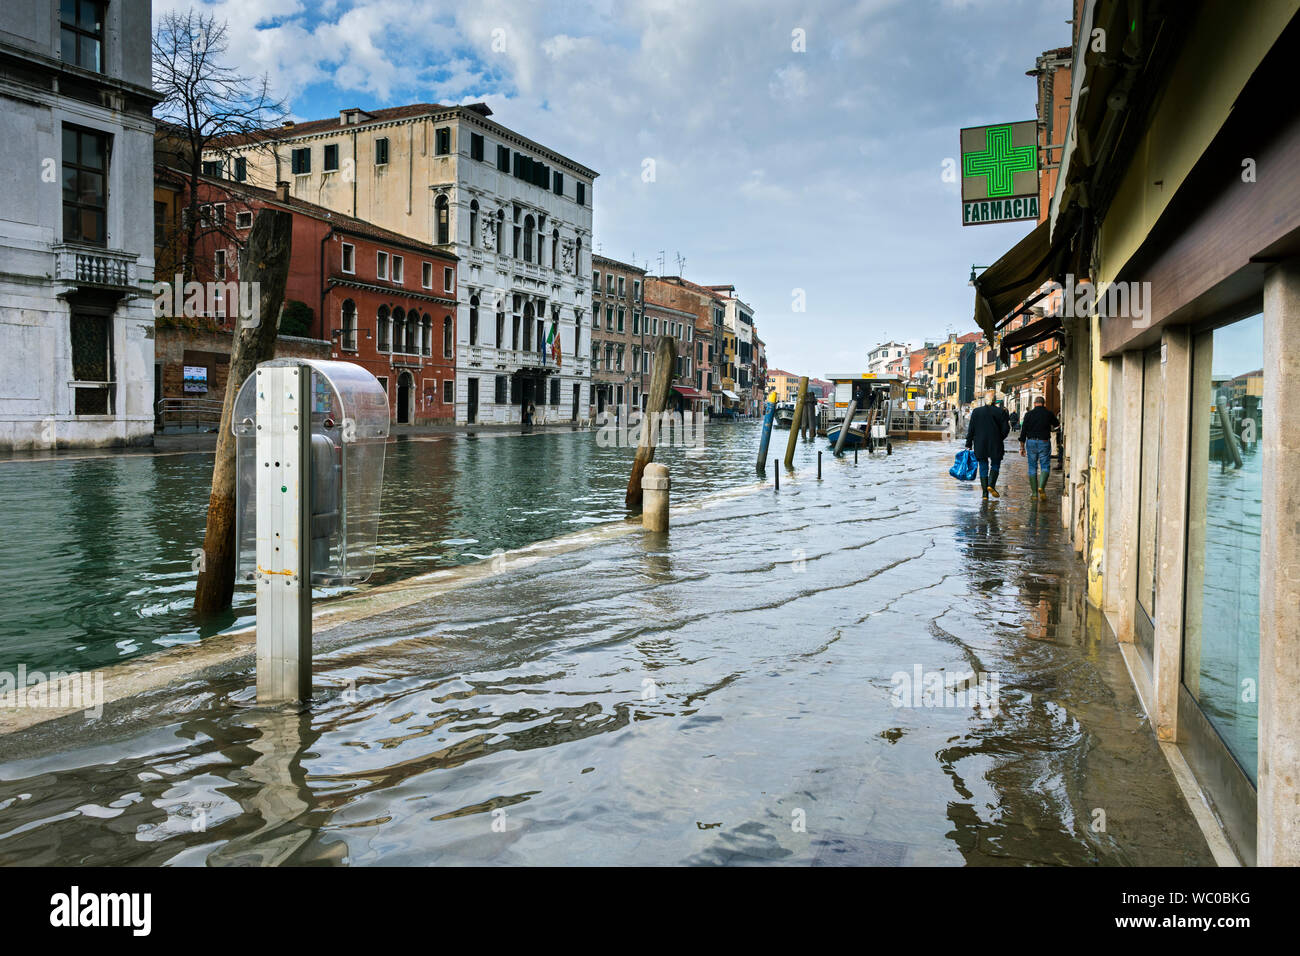 The Fondamenta Cannaregio, by the Canale di Cannaregio, flooded during an acqua alta (high water) event, Venice, Italy Stock Photo